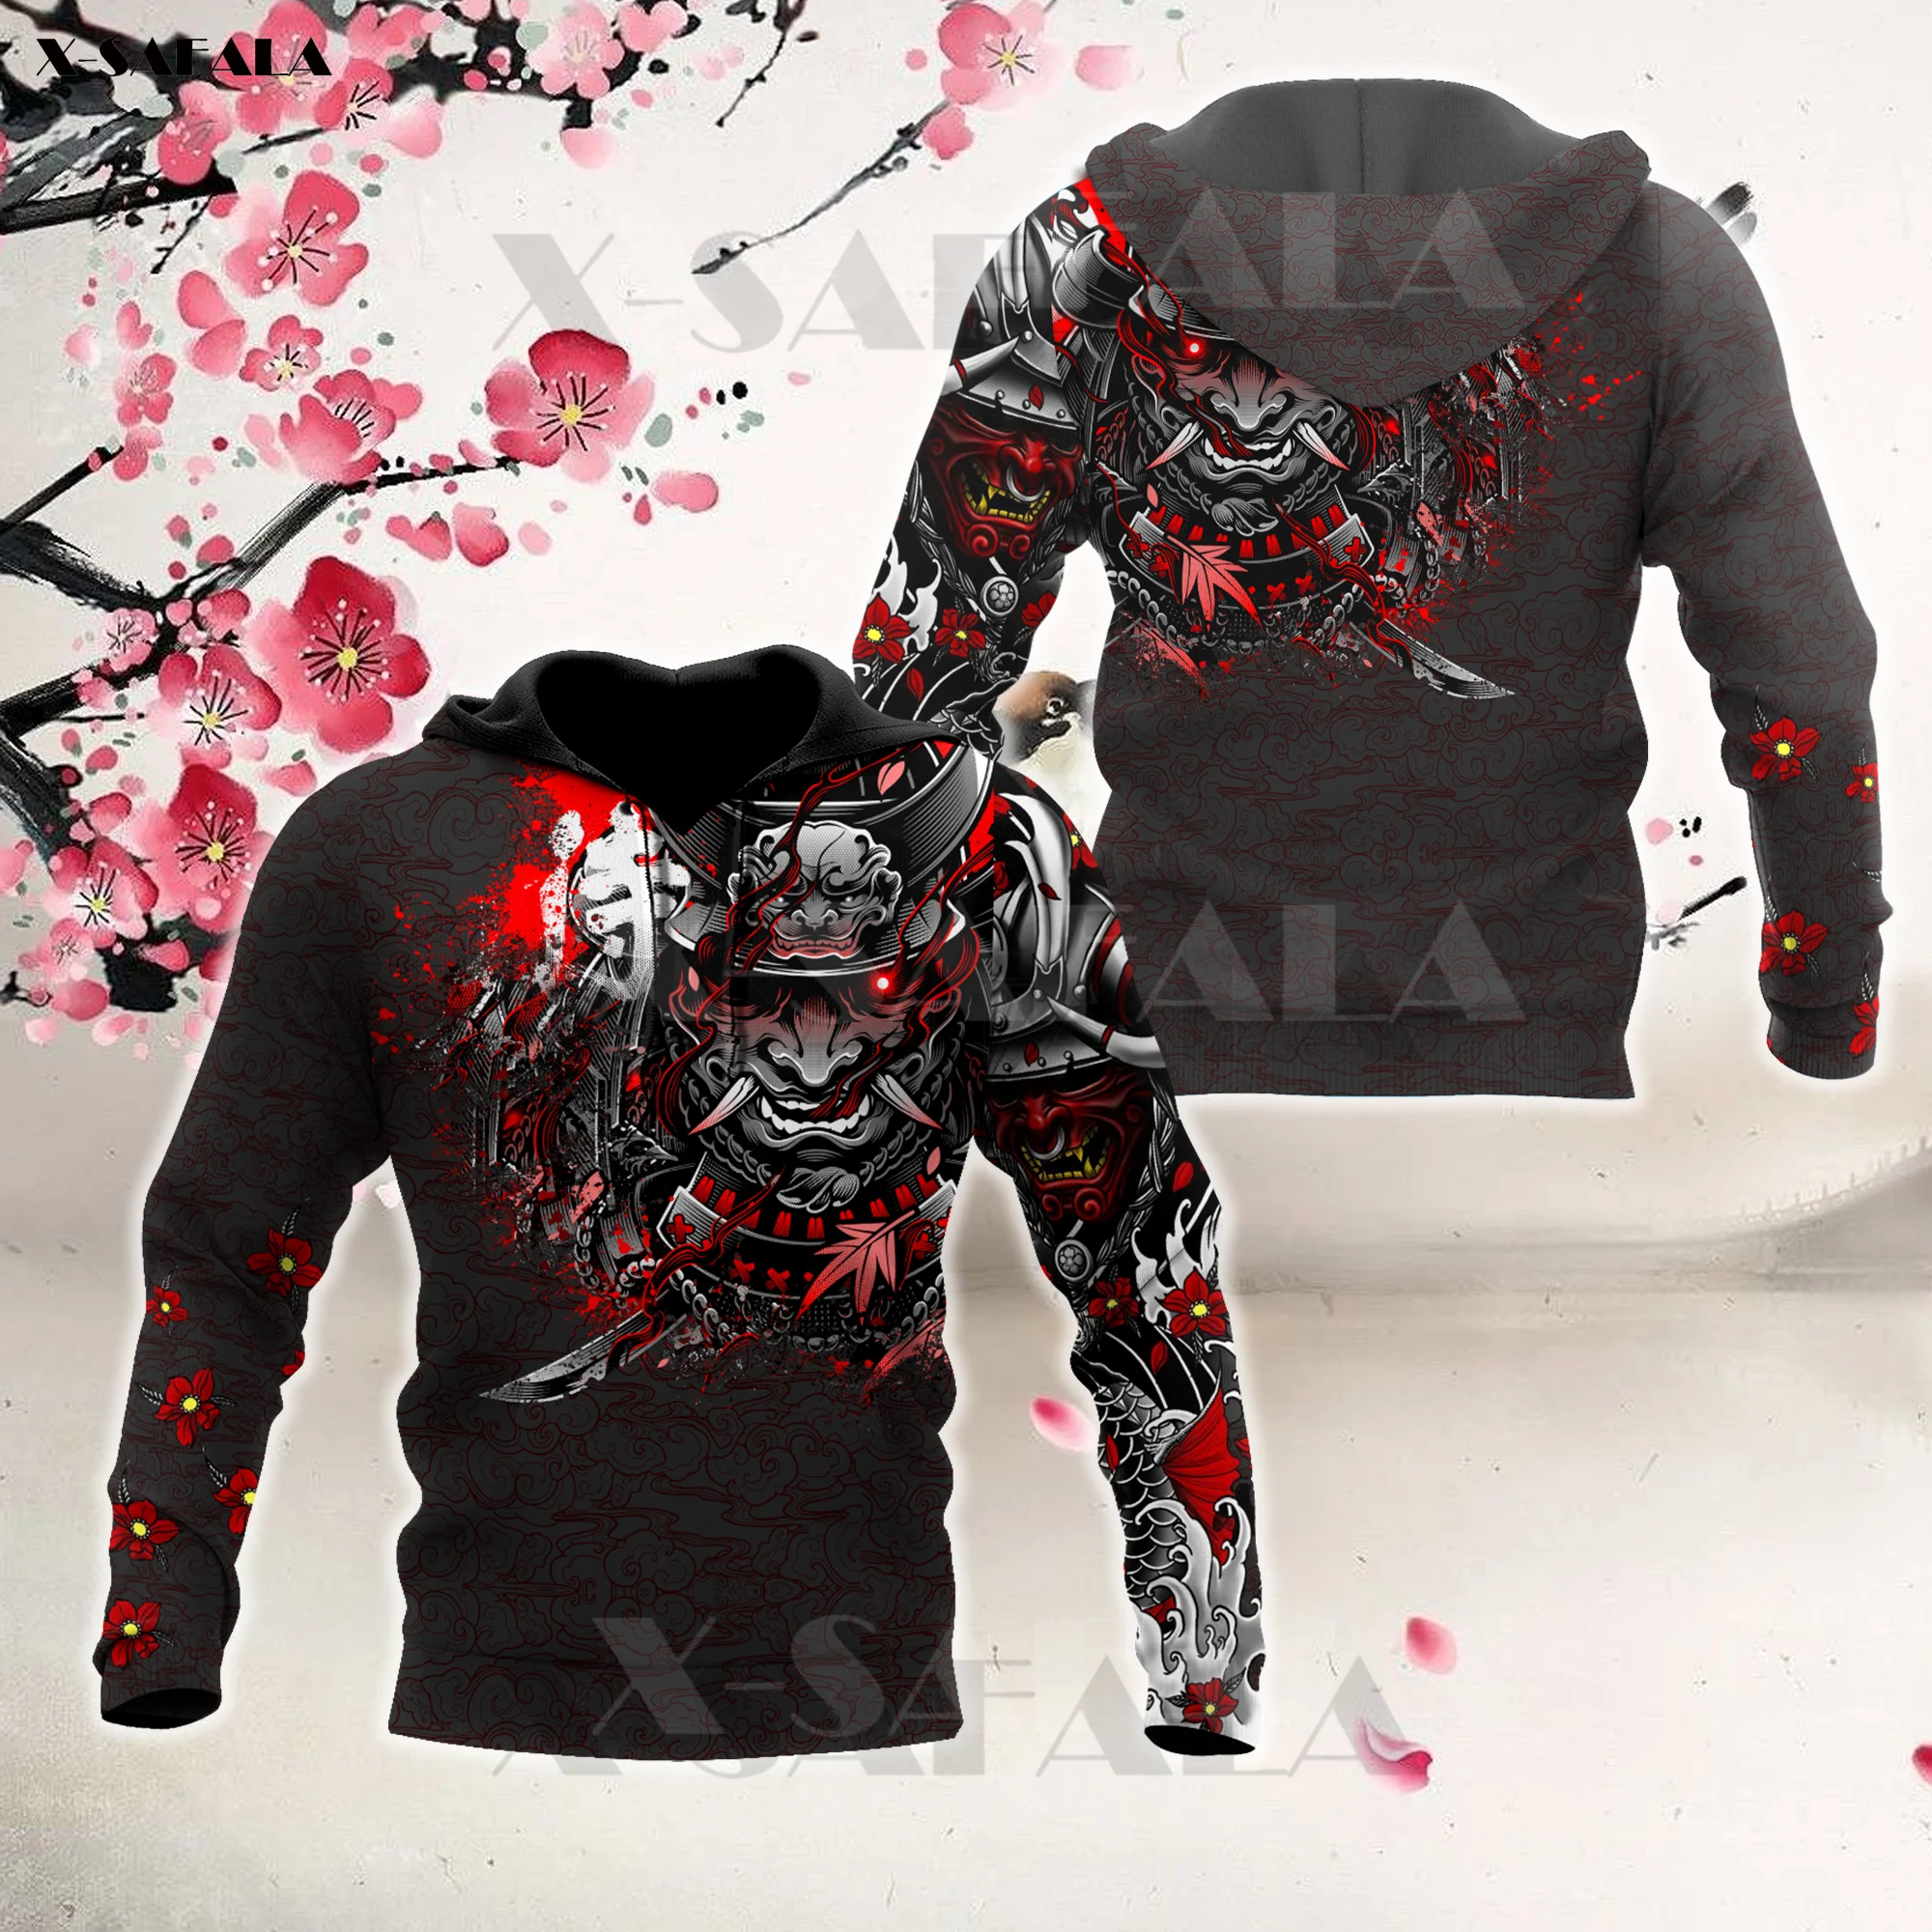 

Samurai Warrior Sakura Japanese 3D Printed Zipper Hoodie Men Pullover Sweatshirt Hooded Jersey Tracksuits Outwear Casual